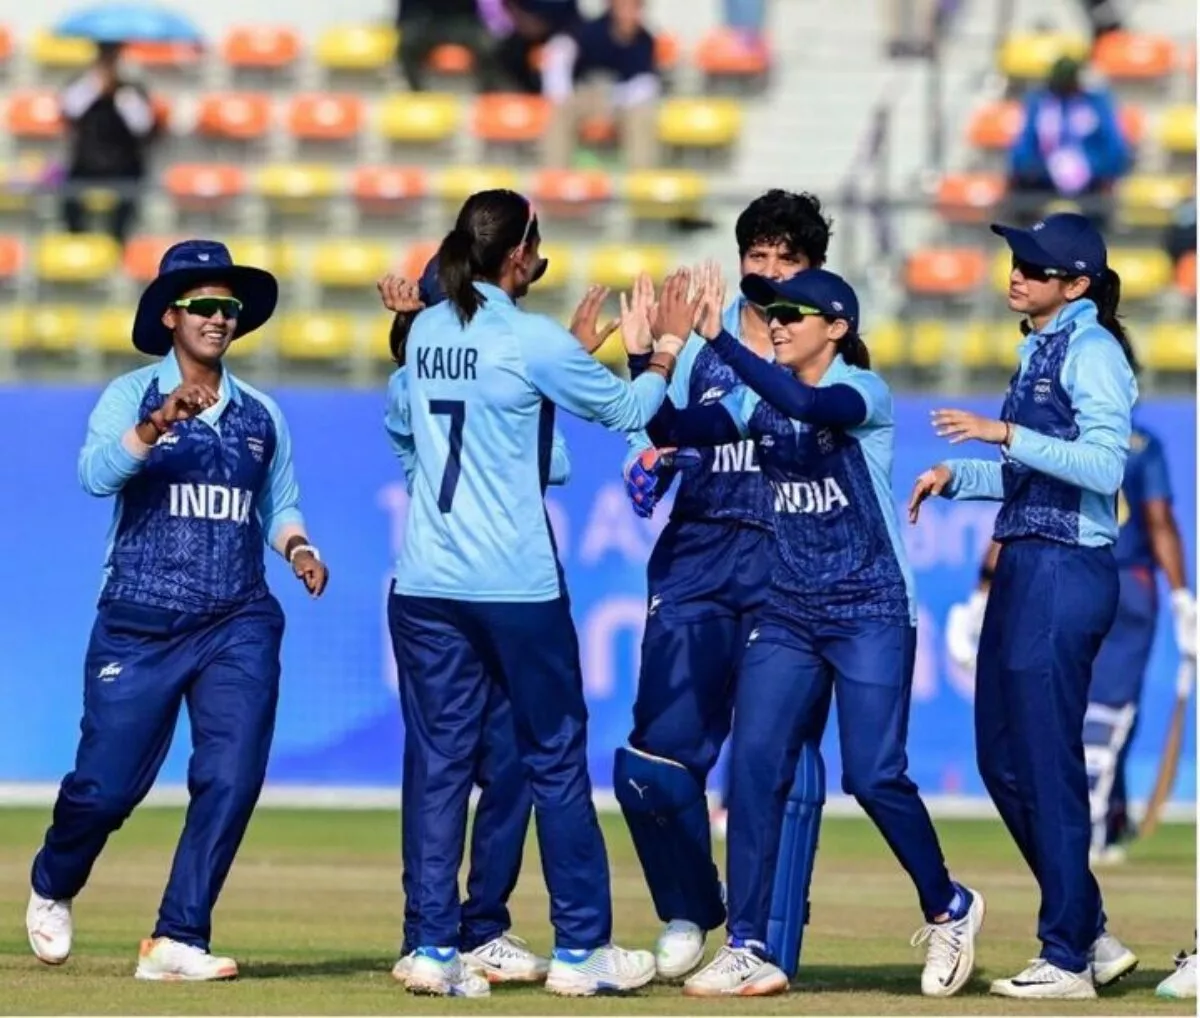 Asian Games: India women's cricket team bag historic GOLD after defeating Sri Lanka women